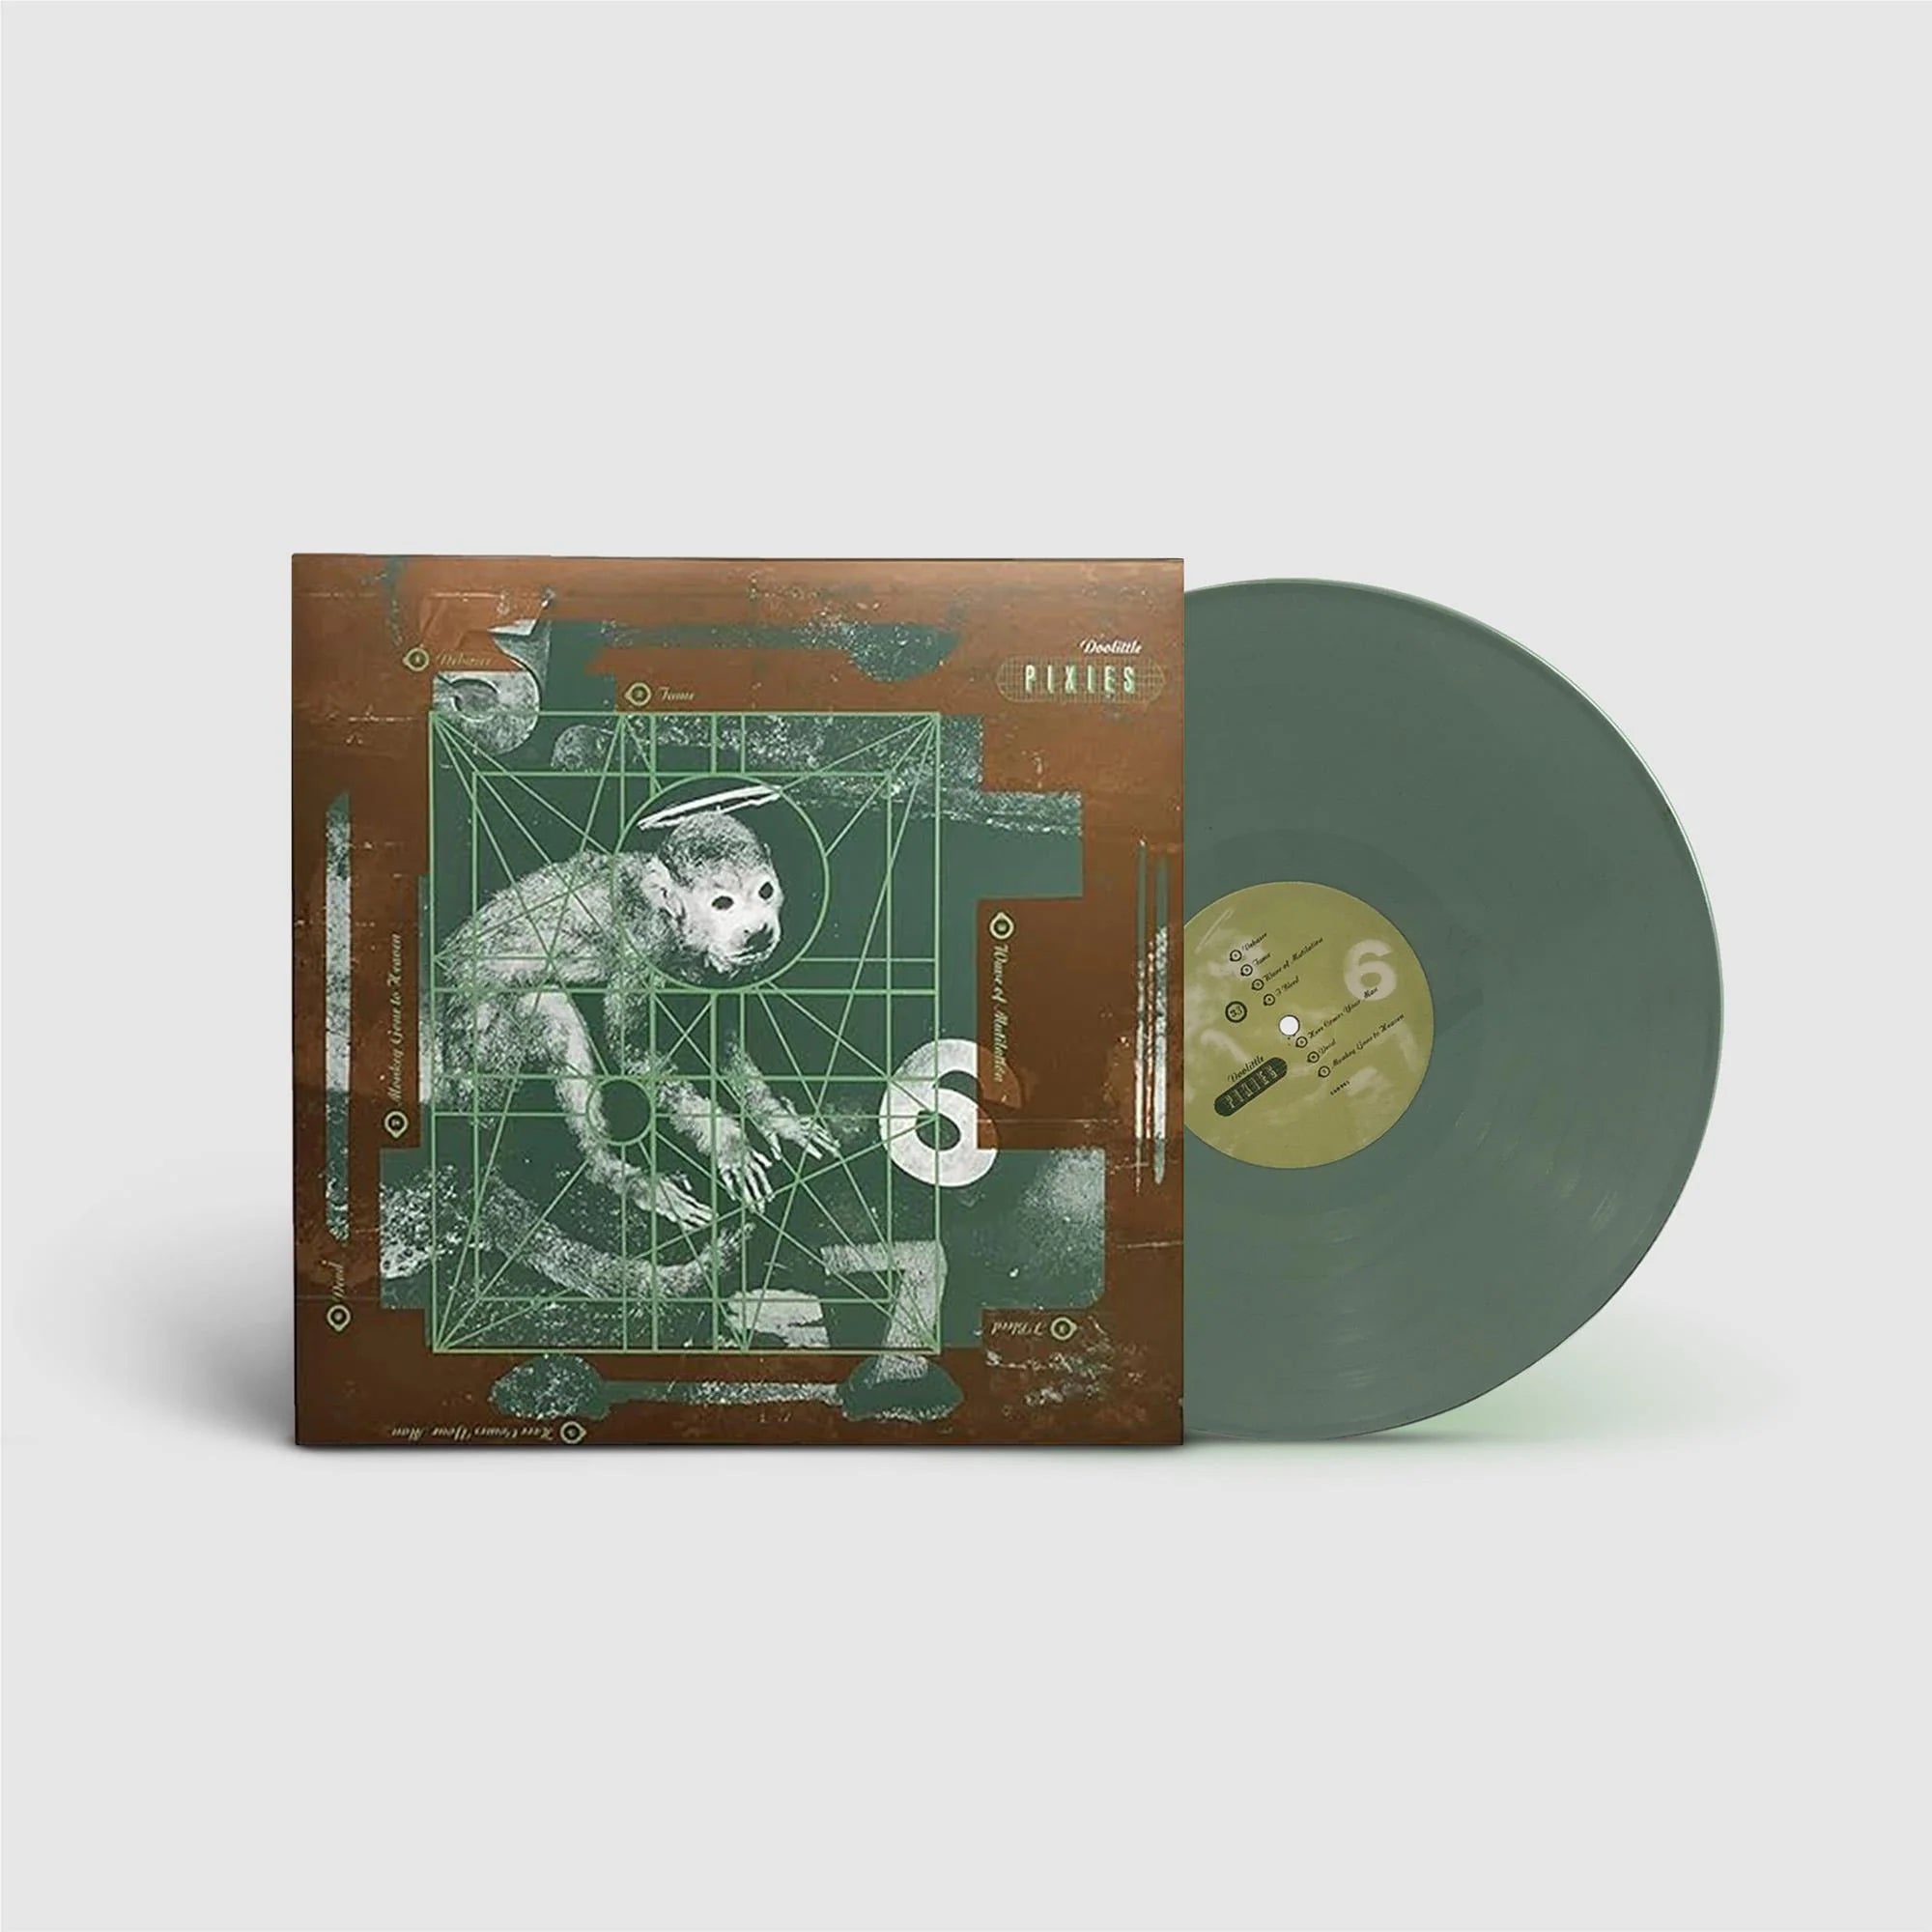 Pixies - Doolittle (35th Anniversary Ed. Green vinyl reissue) - Vinyl - New